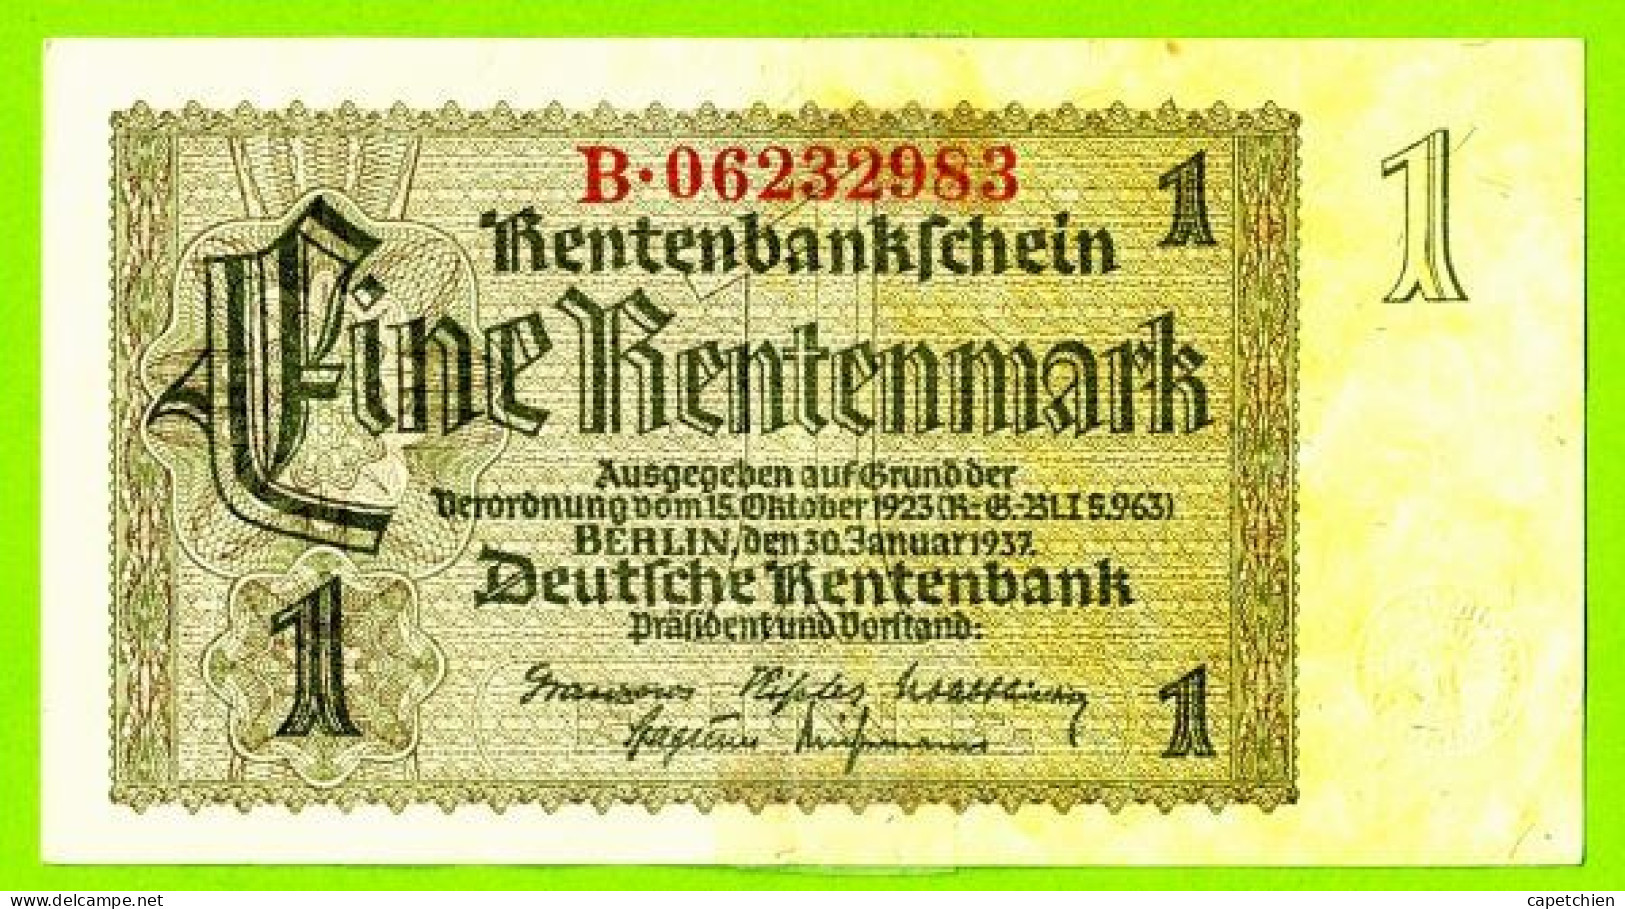 ALLEMAGNE / 1 RENTENMARK  / 30 JANVIER 1937 / TTB - 1 Rentenmark